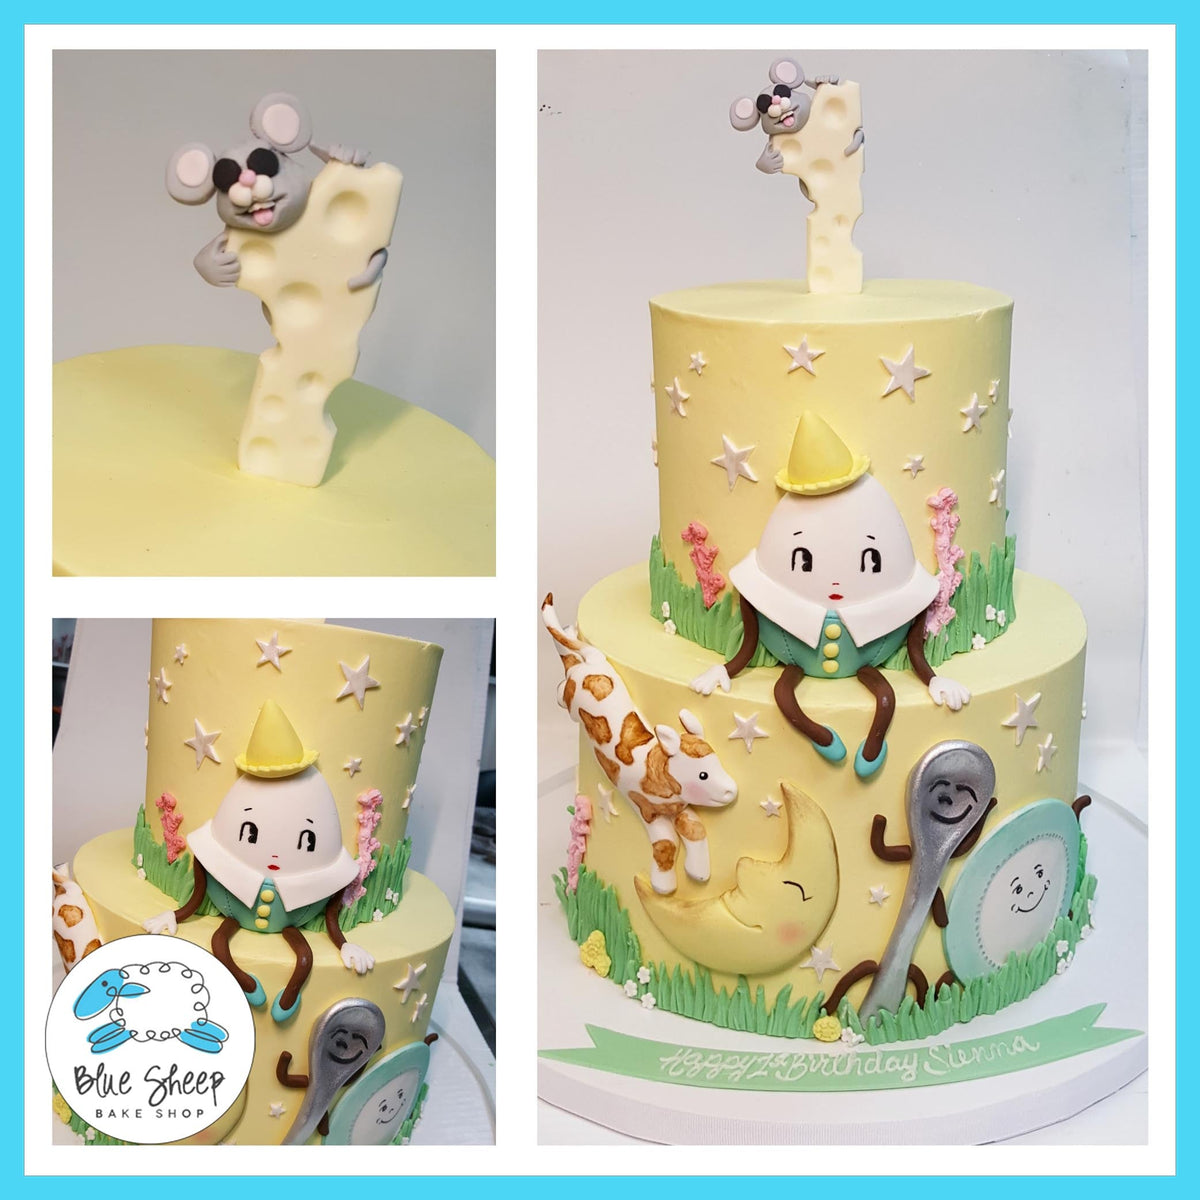 Baby Weber's Fishing Themed Baby Shower Cake